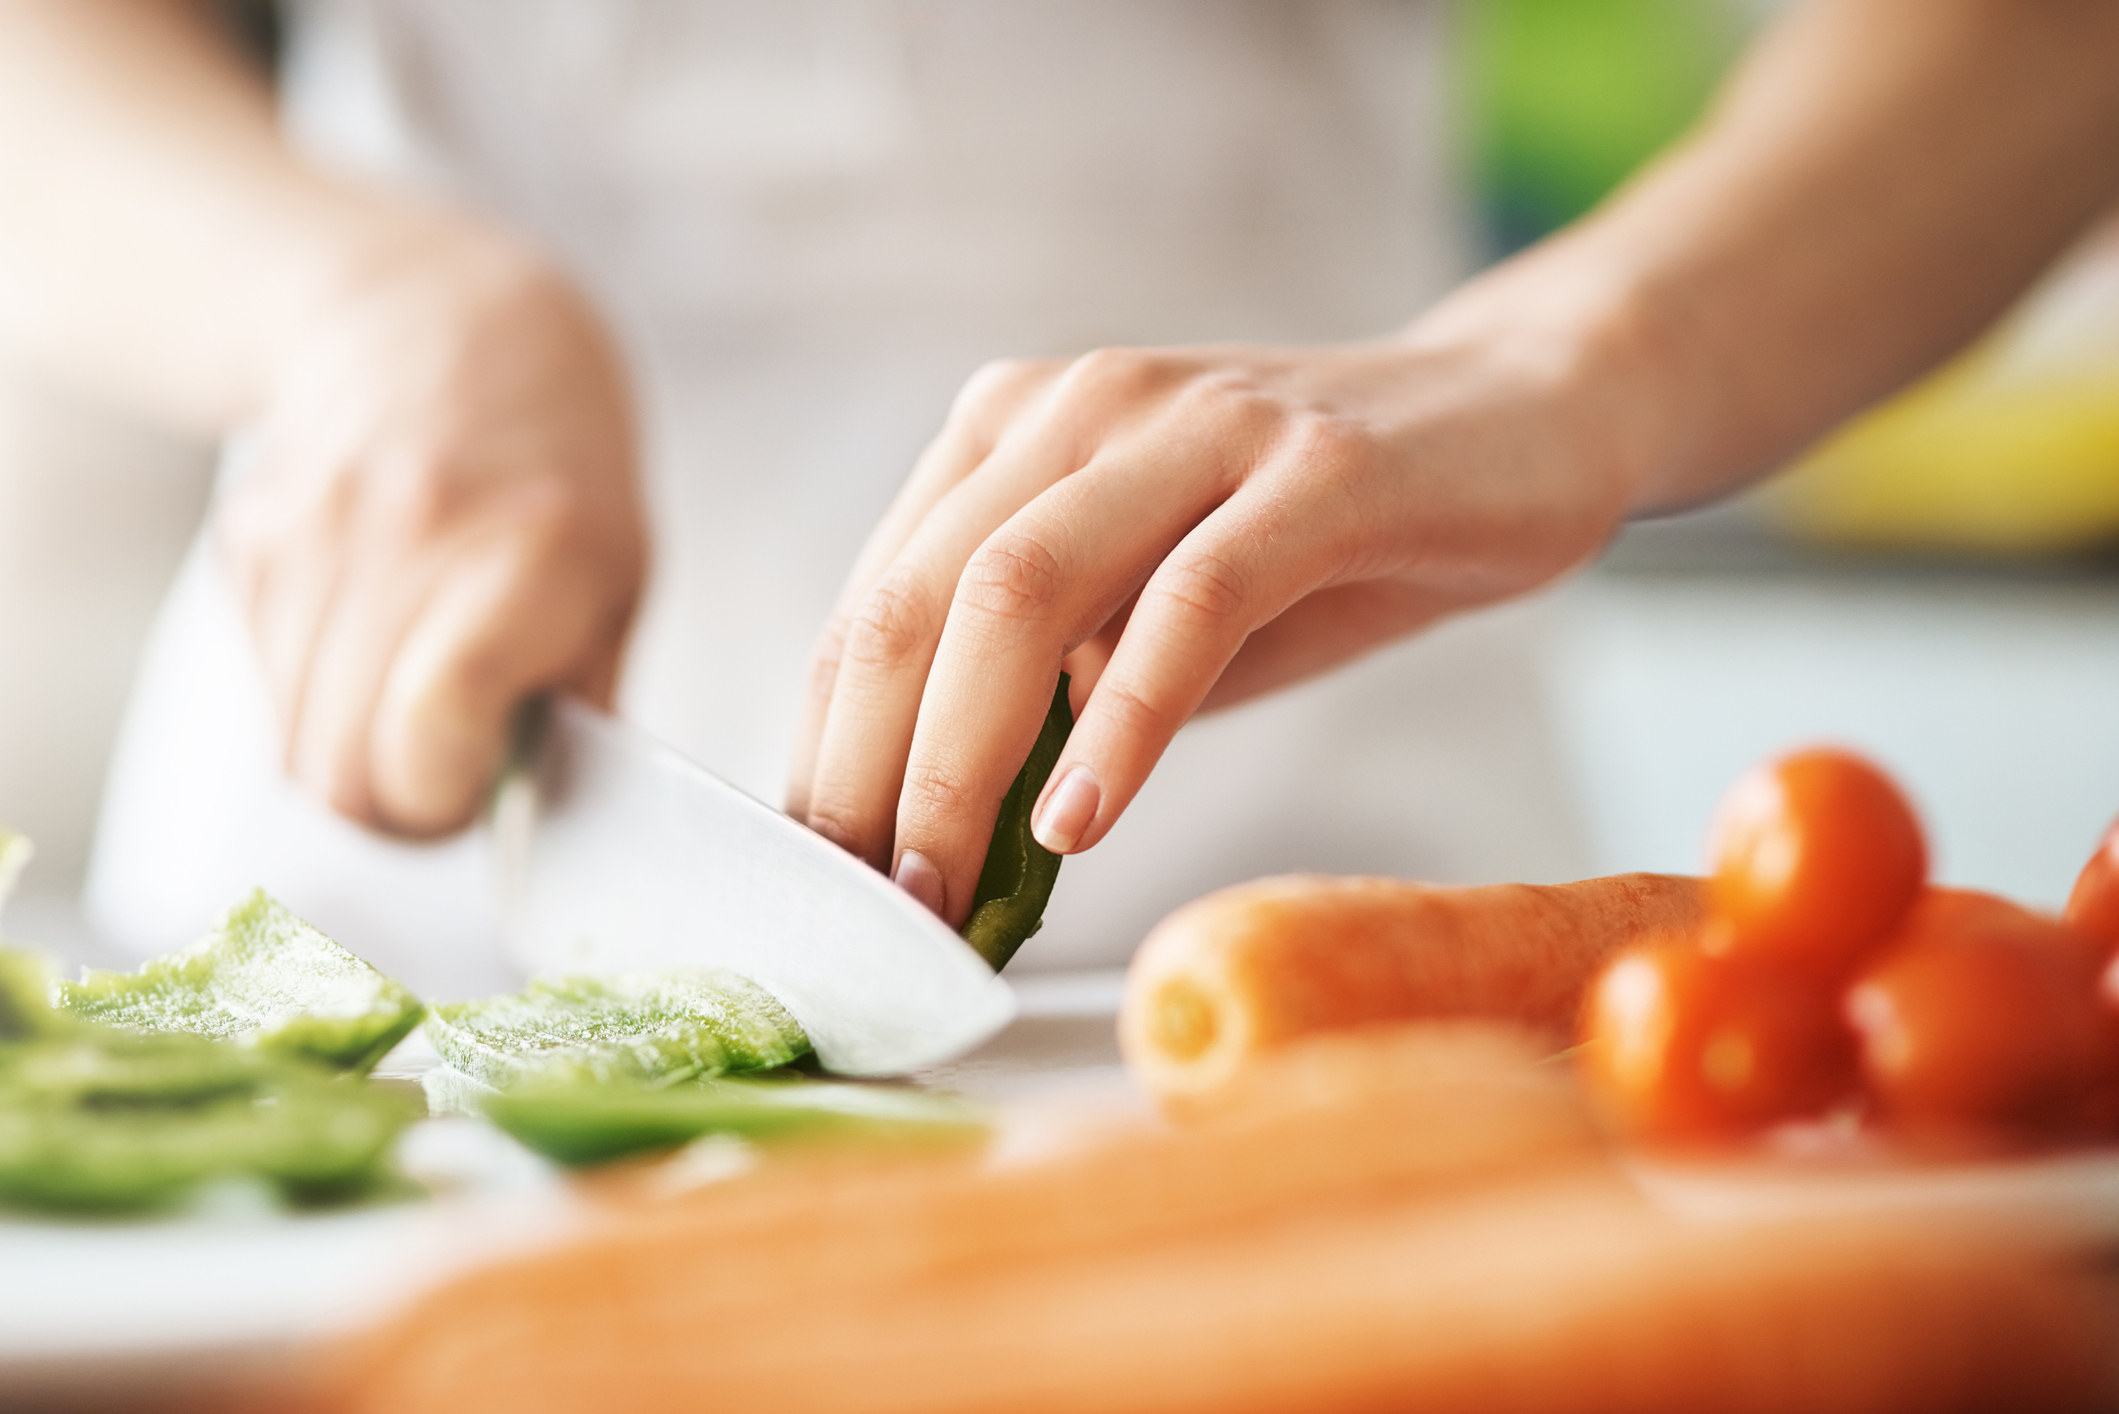 Close-up of hands chopping veggies